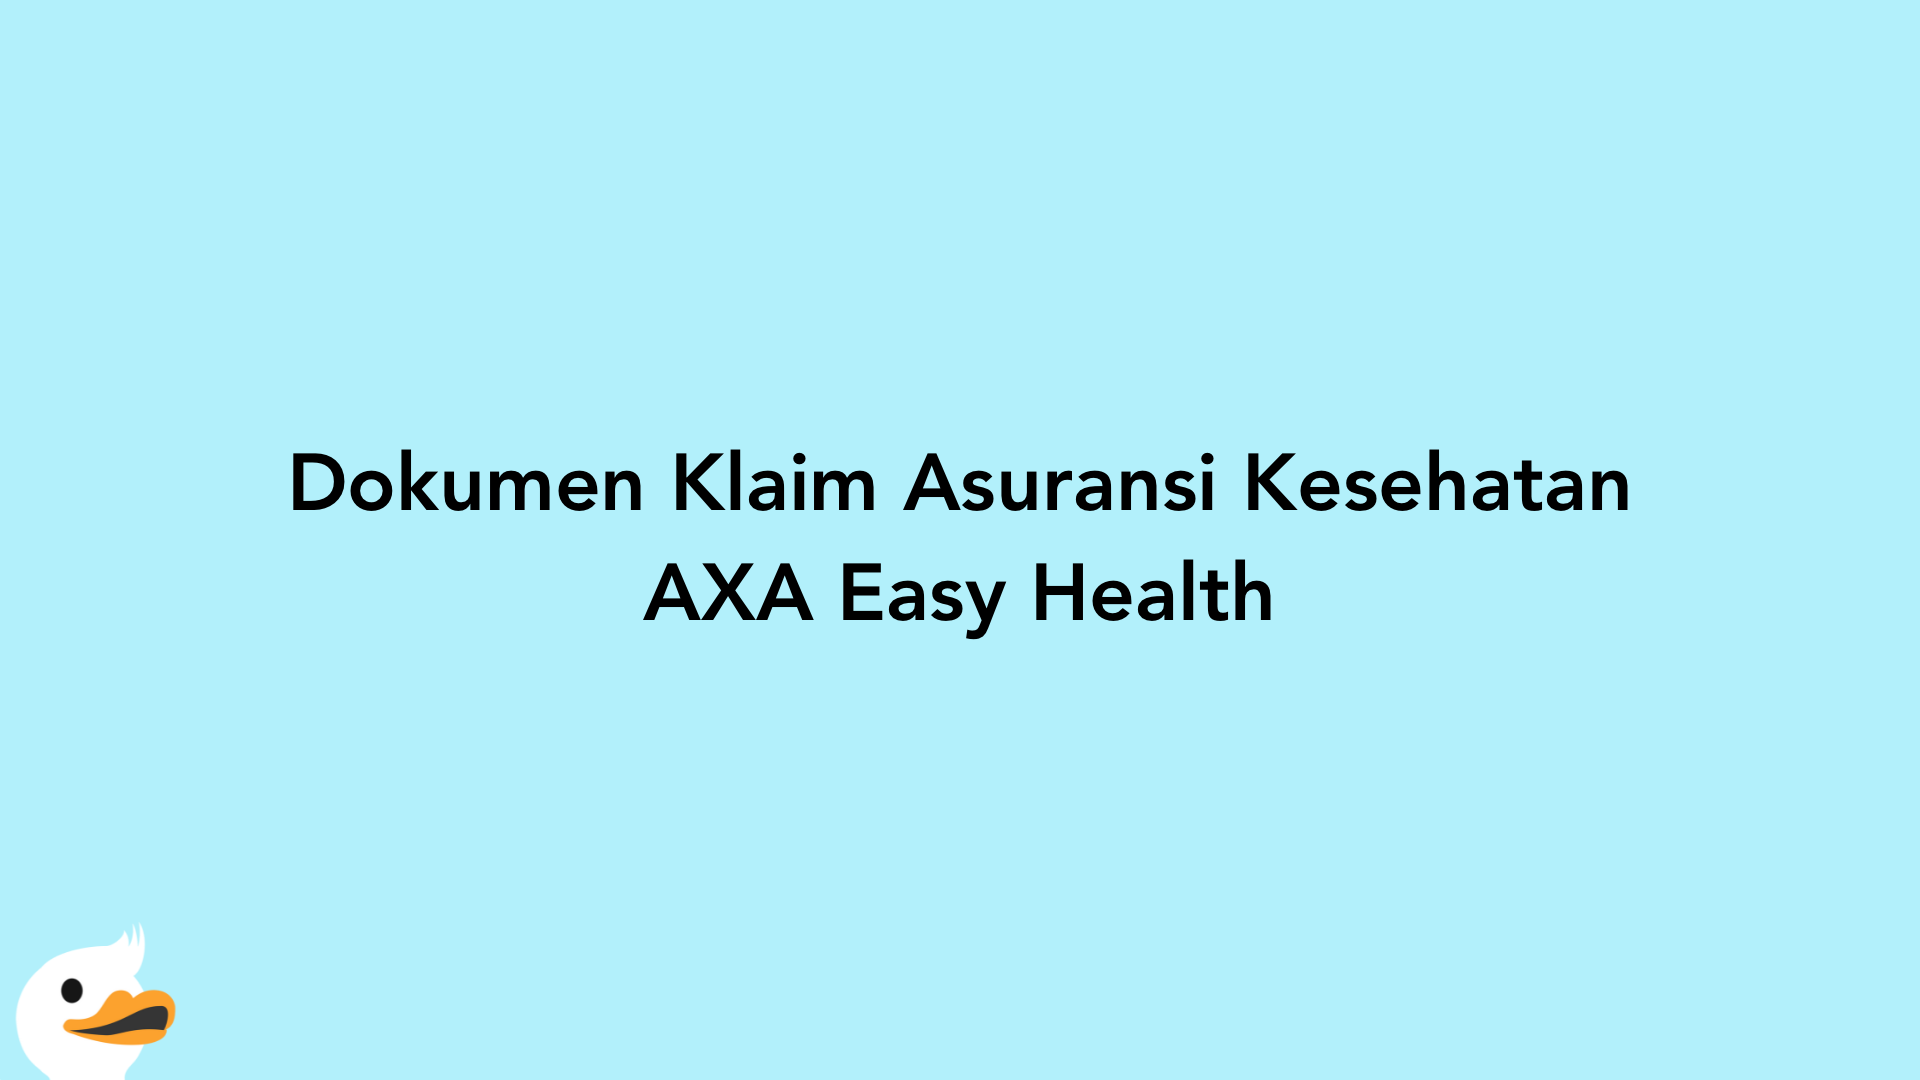 Dokumen Klaim Asuransi Kesehatan AXA Easy Health